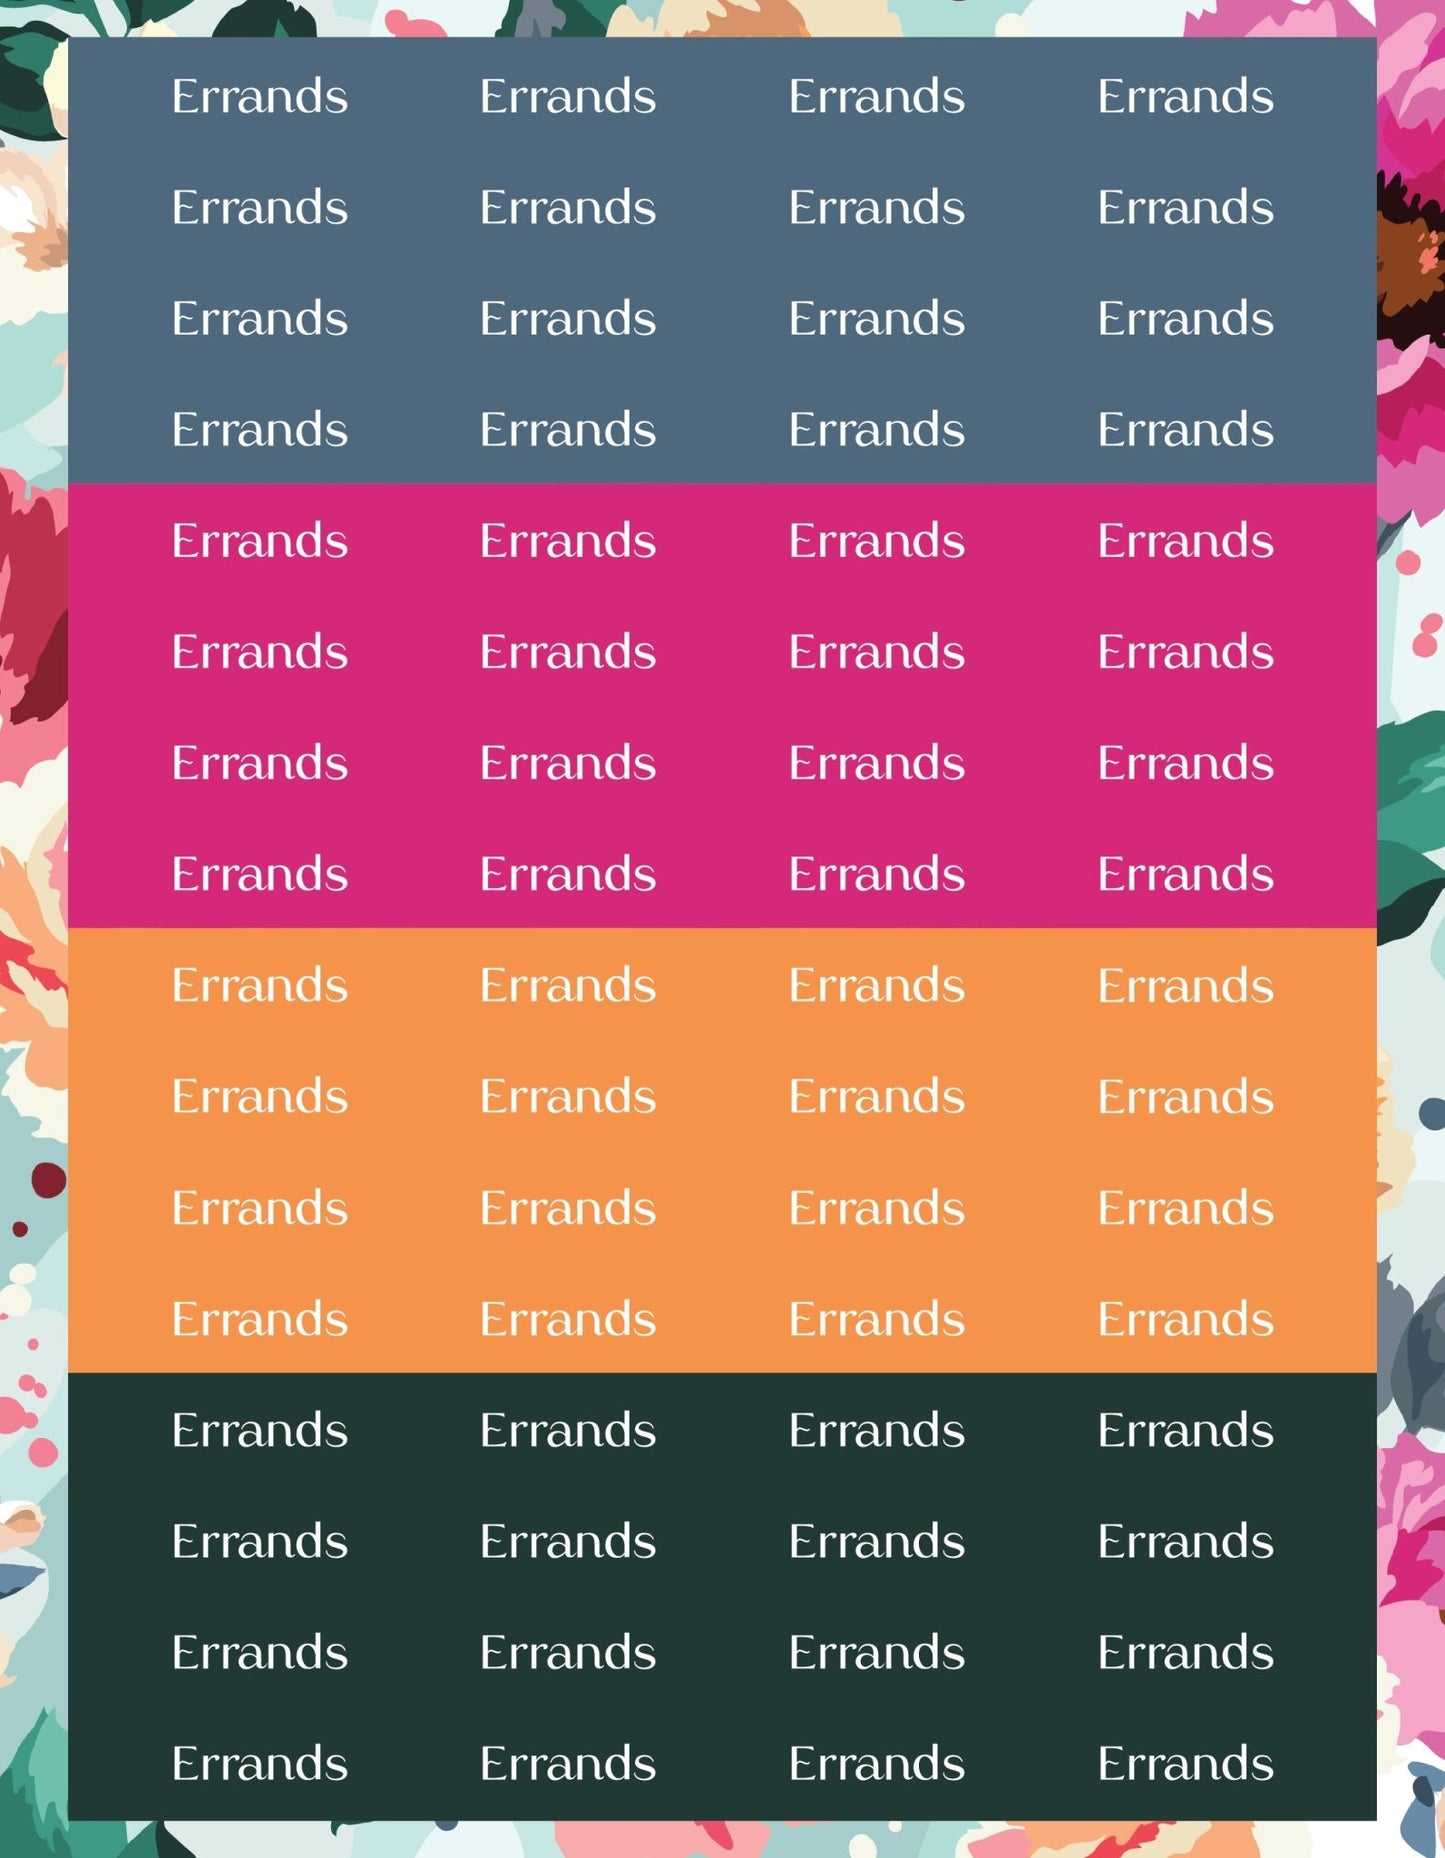 Errands Sticker Sheets - 9 Designs/Colors - Colibri Paper Co